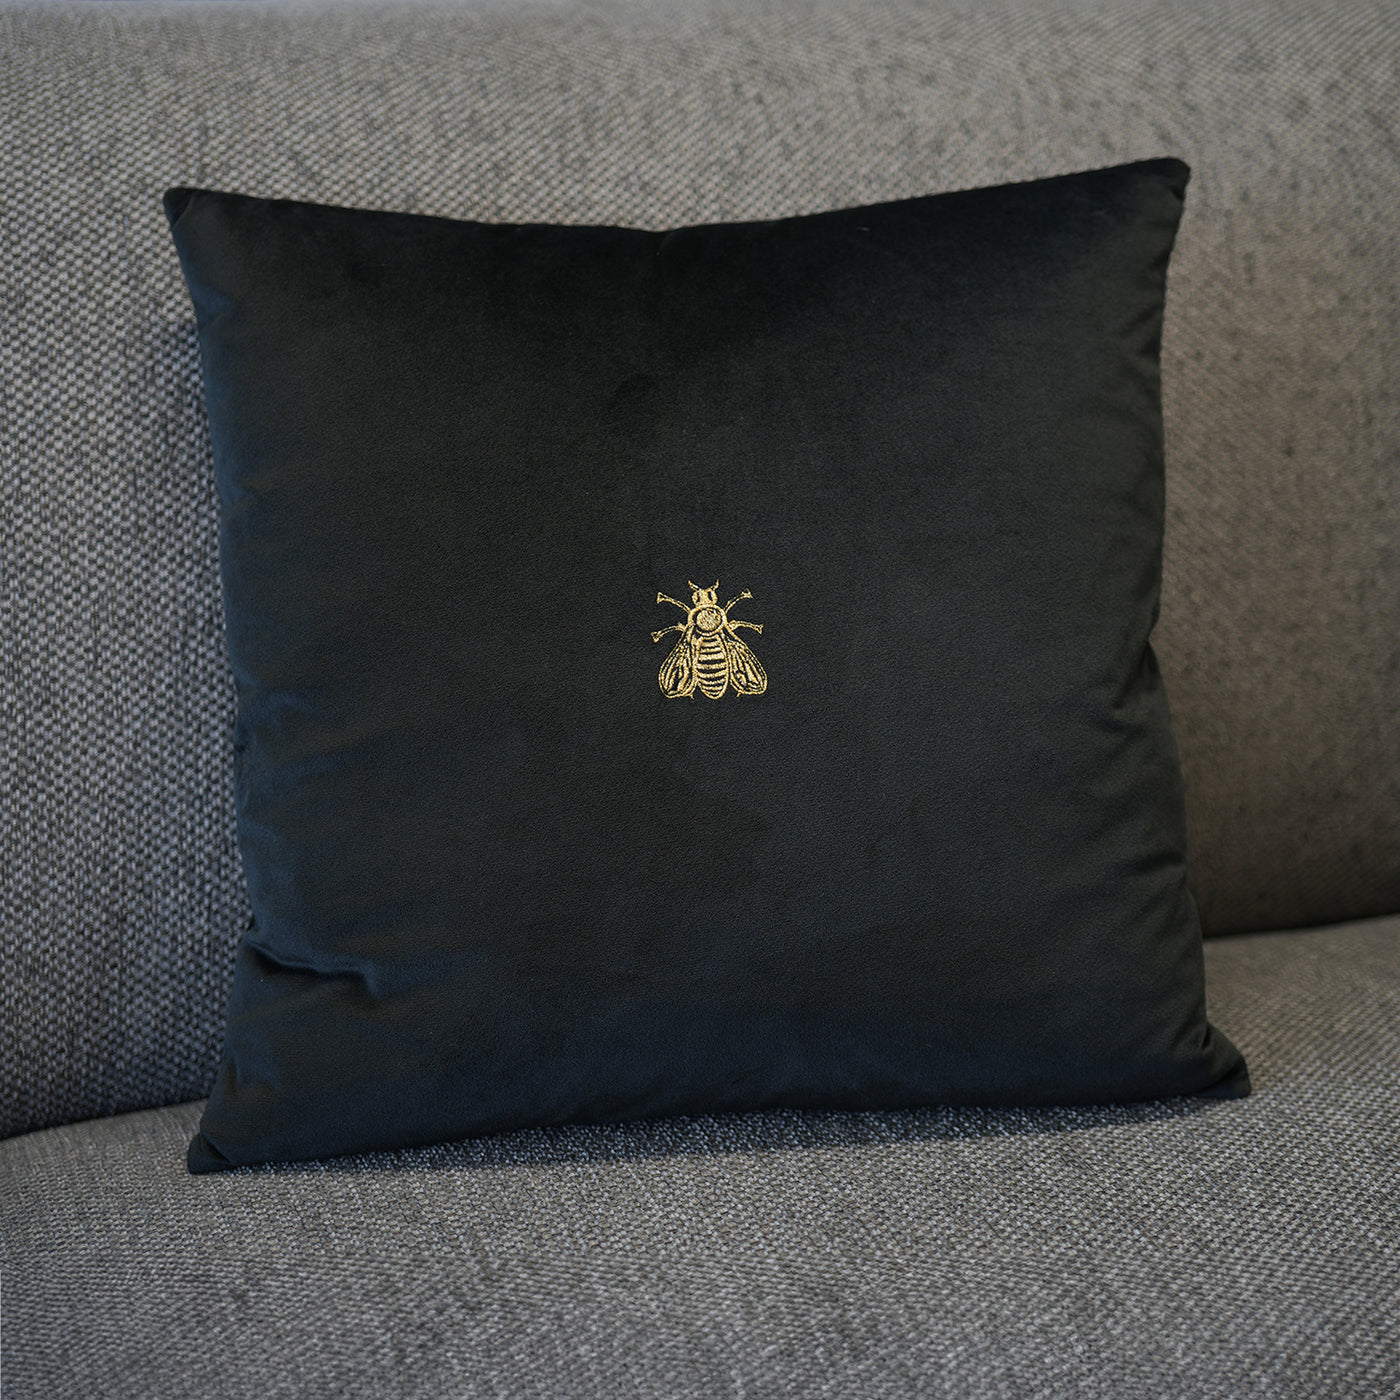 Napoleon 1 bee embroidered cushion